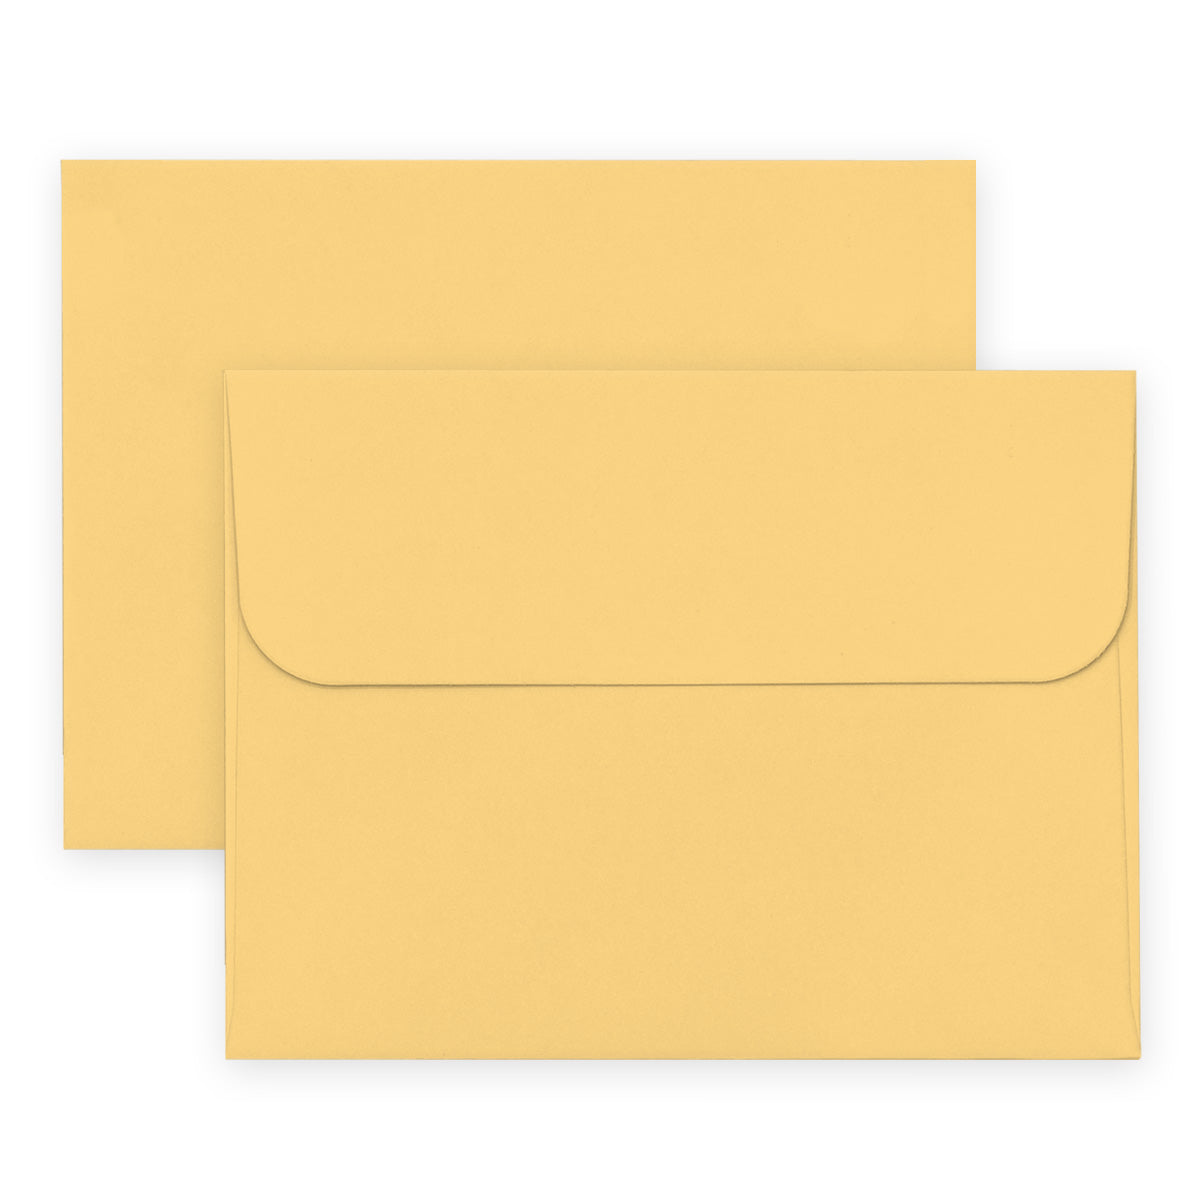 Envelope Bundle Crafty Necessities: Fall Harvest Envelope Bundle